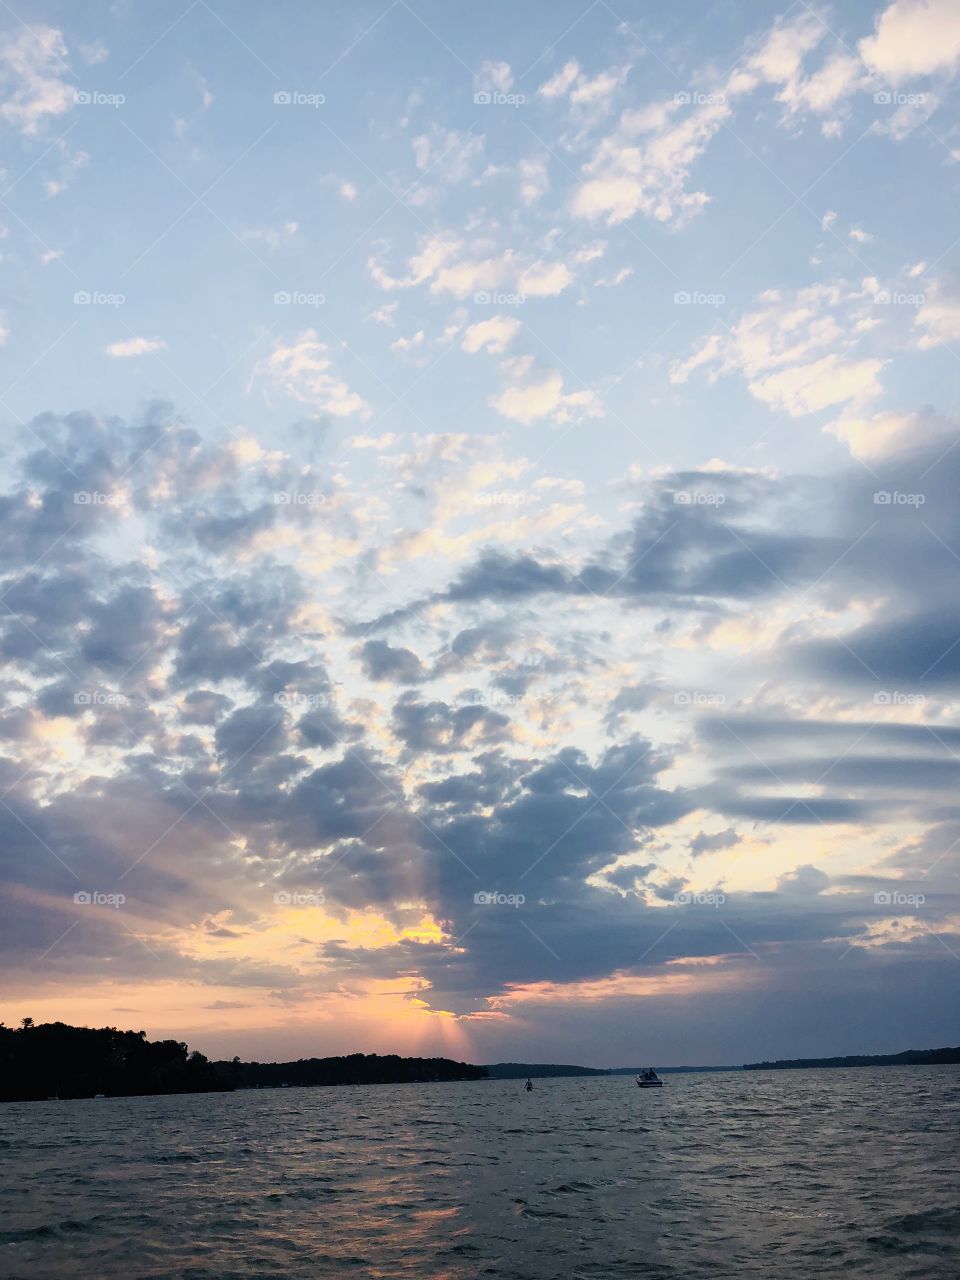 Mother nature’s gift of a beautiful sunrise over Lake Geneva. 